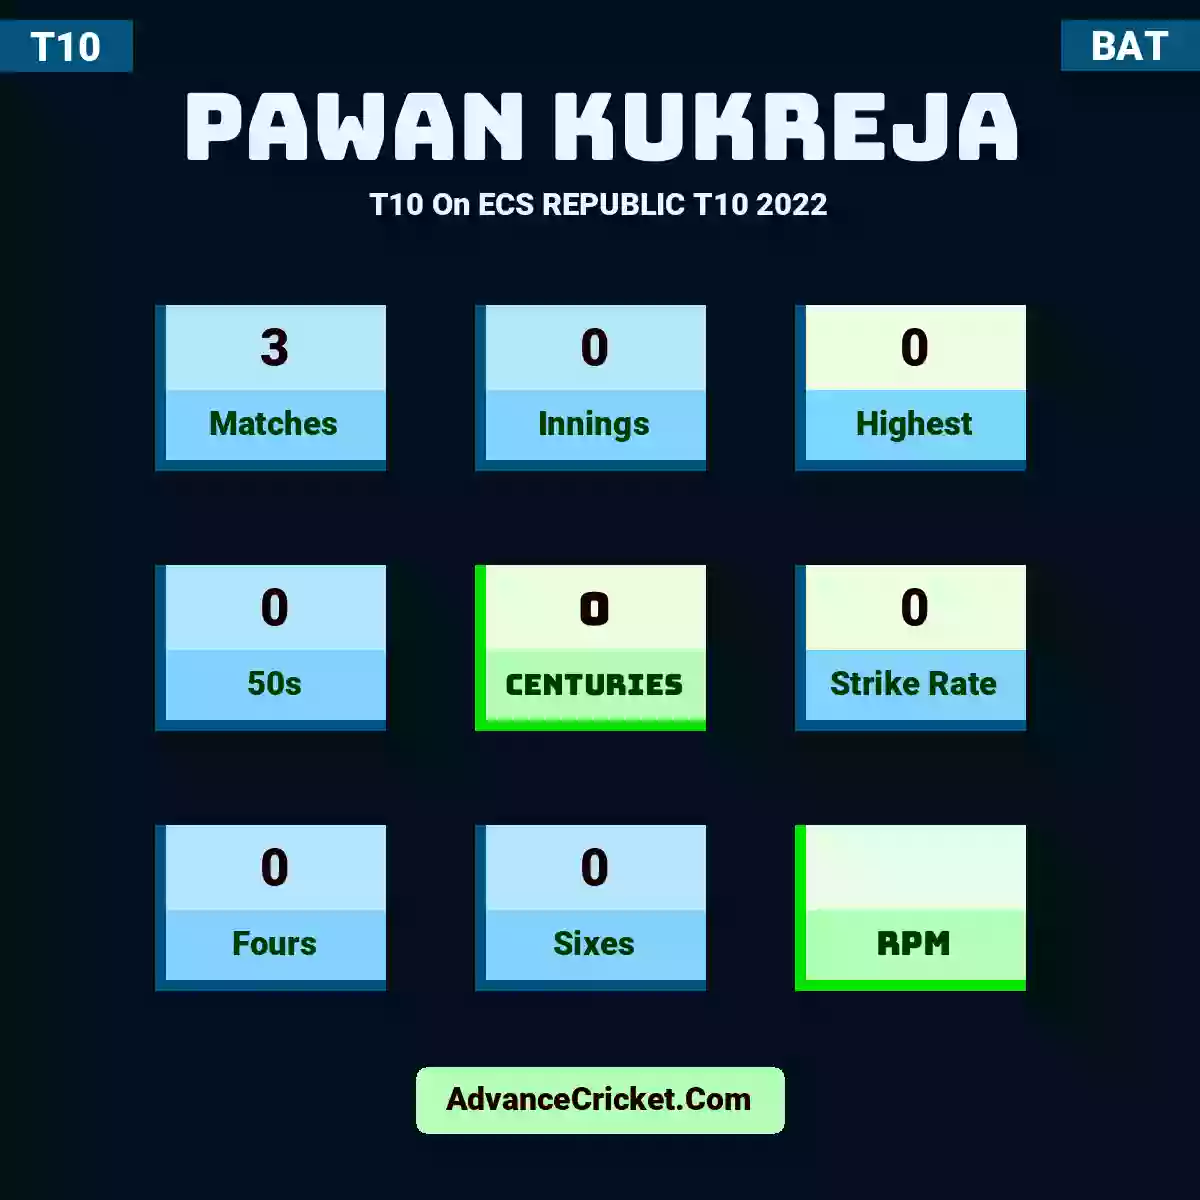 Pawan Kukreja T10  On ECS REPUBLIC T10 2022, Pawan Kukreja played 3 matches, scored 0 runs as highest, 0 half-centuries, and 0 centuries, with a strike rate of 0. P.Kukreja hit 0 fours and 0 sixes.